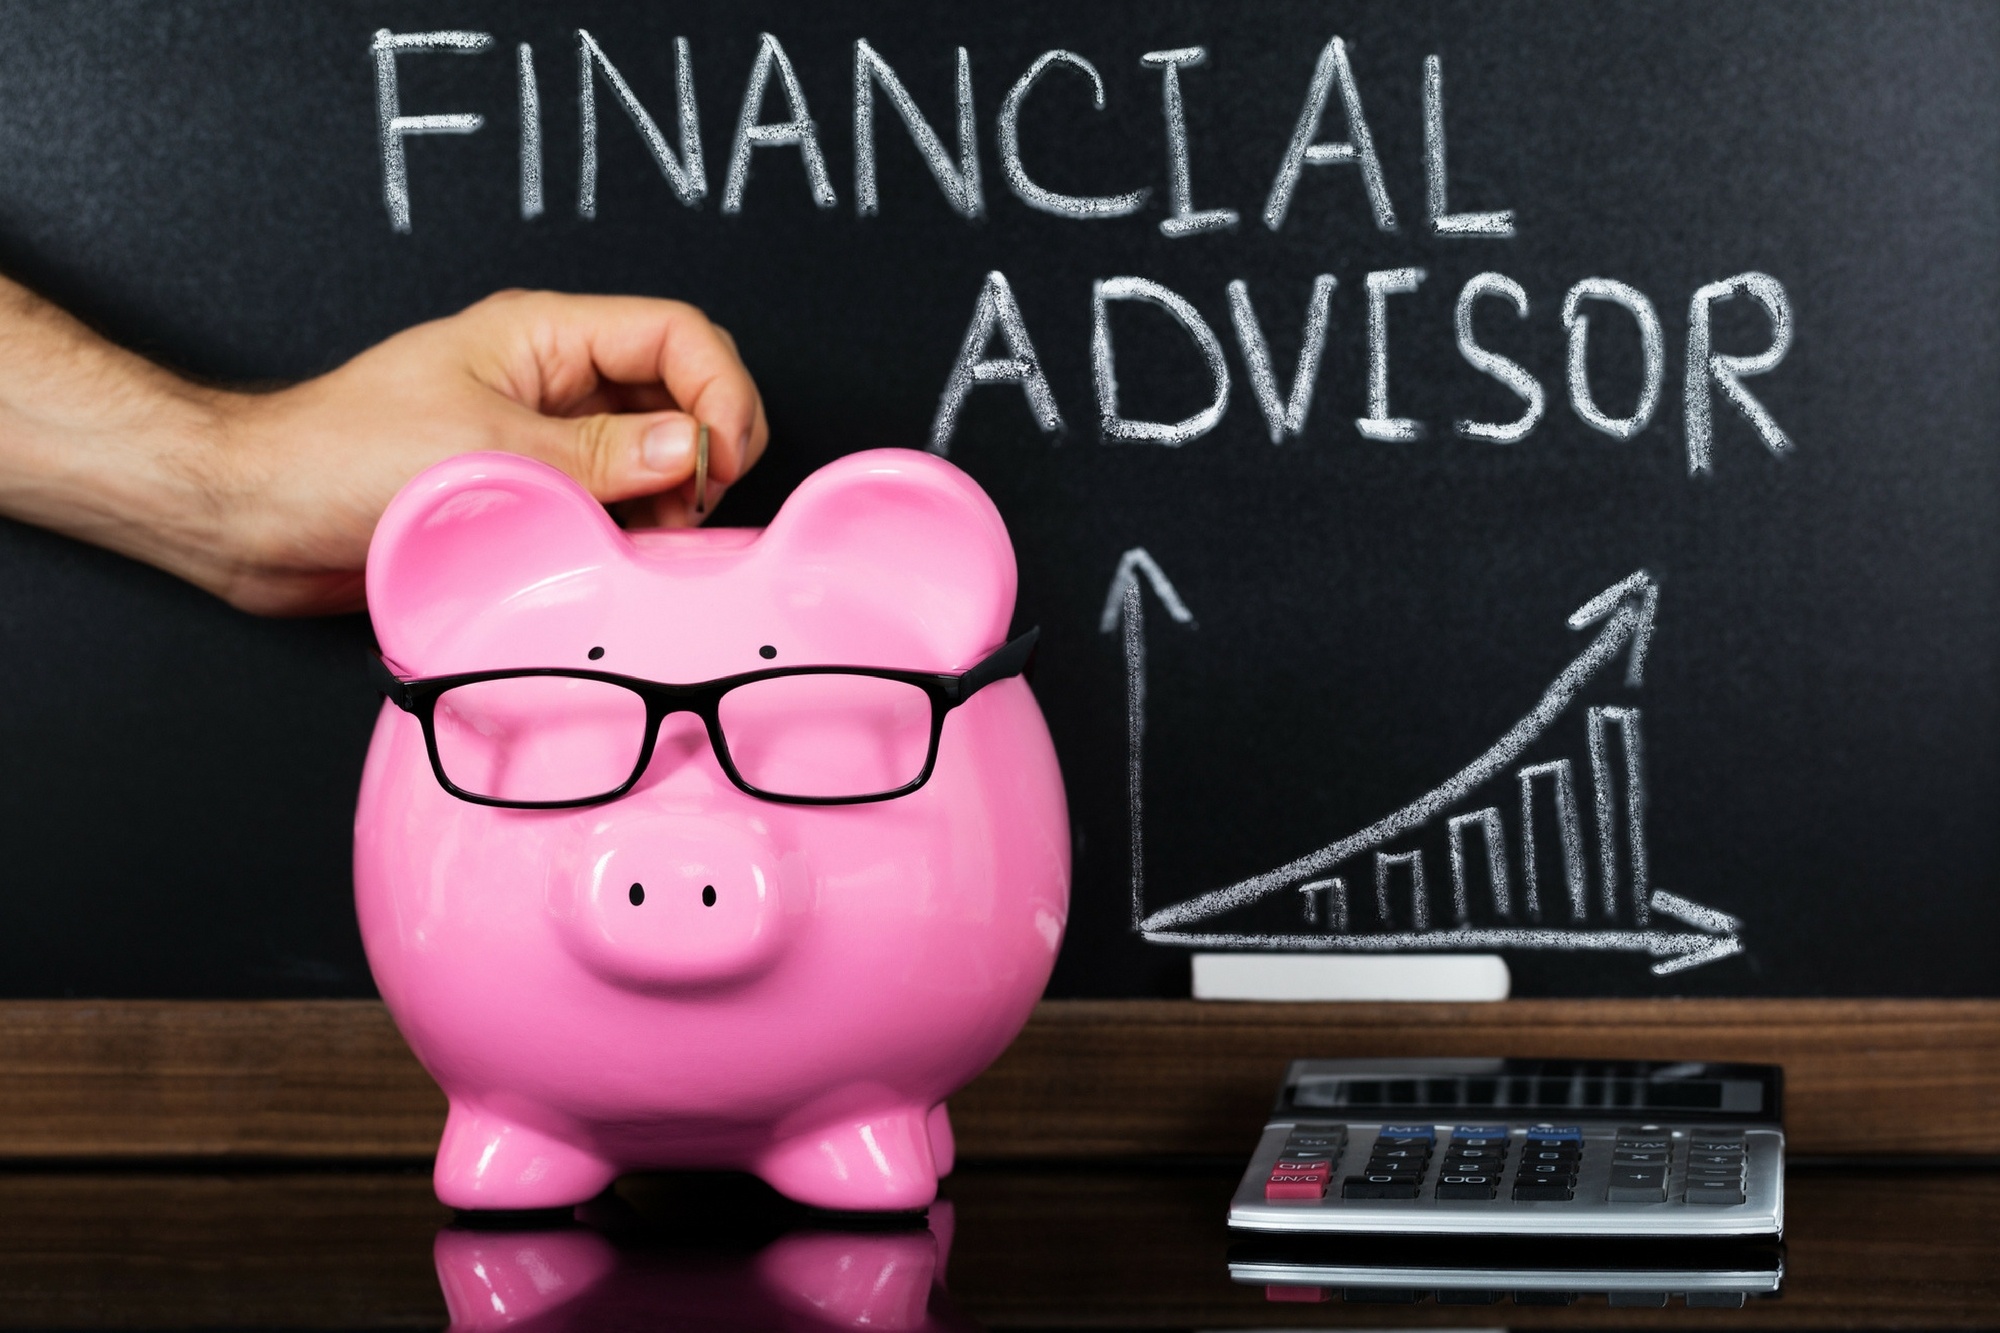 How to get a job as a financial advisor